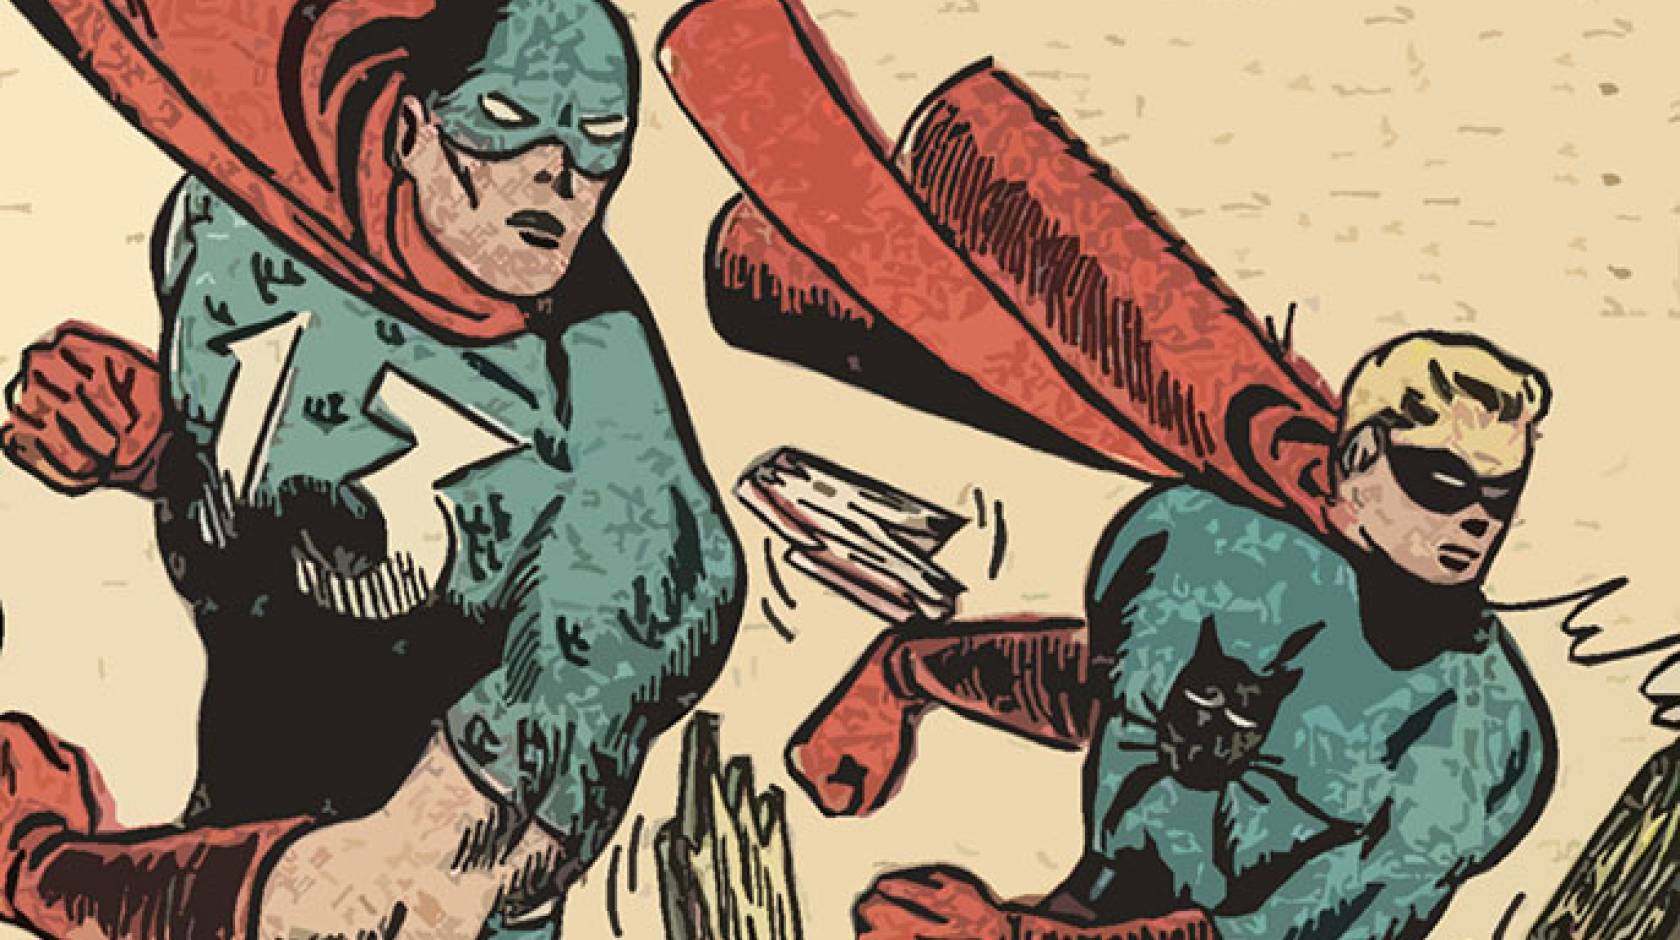 Rider University Professor Pens Comic Book About Superhero With